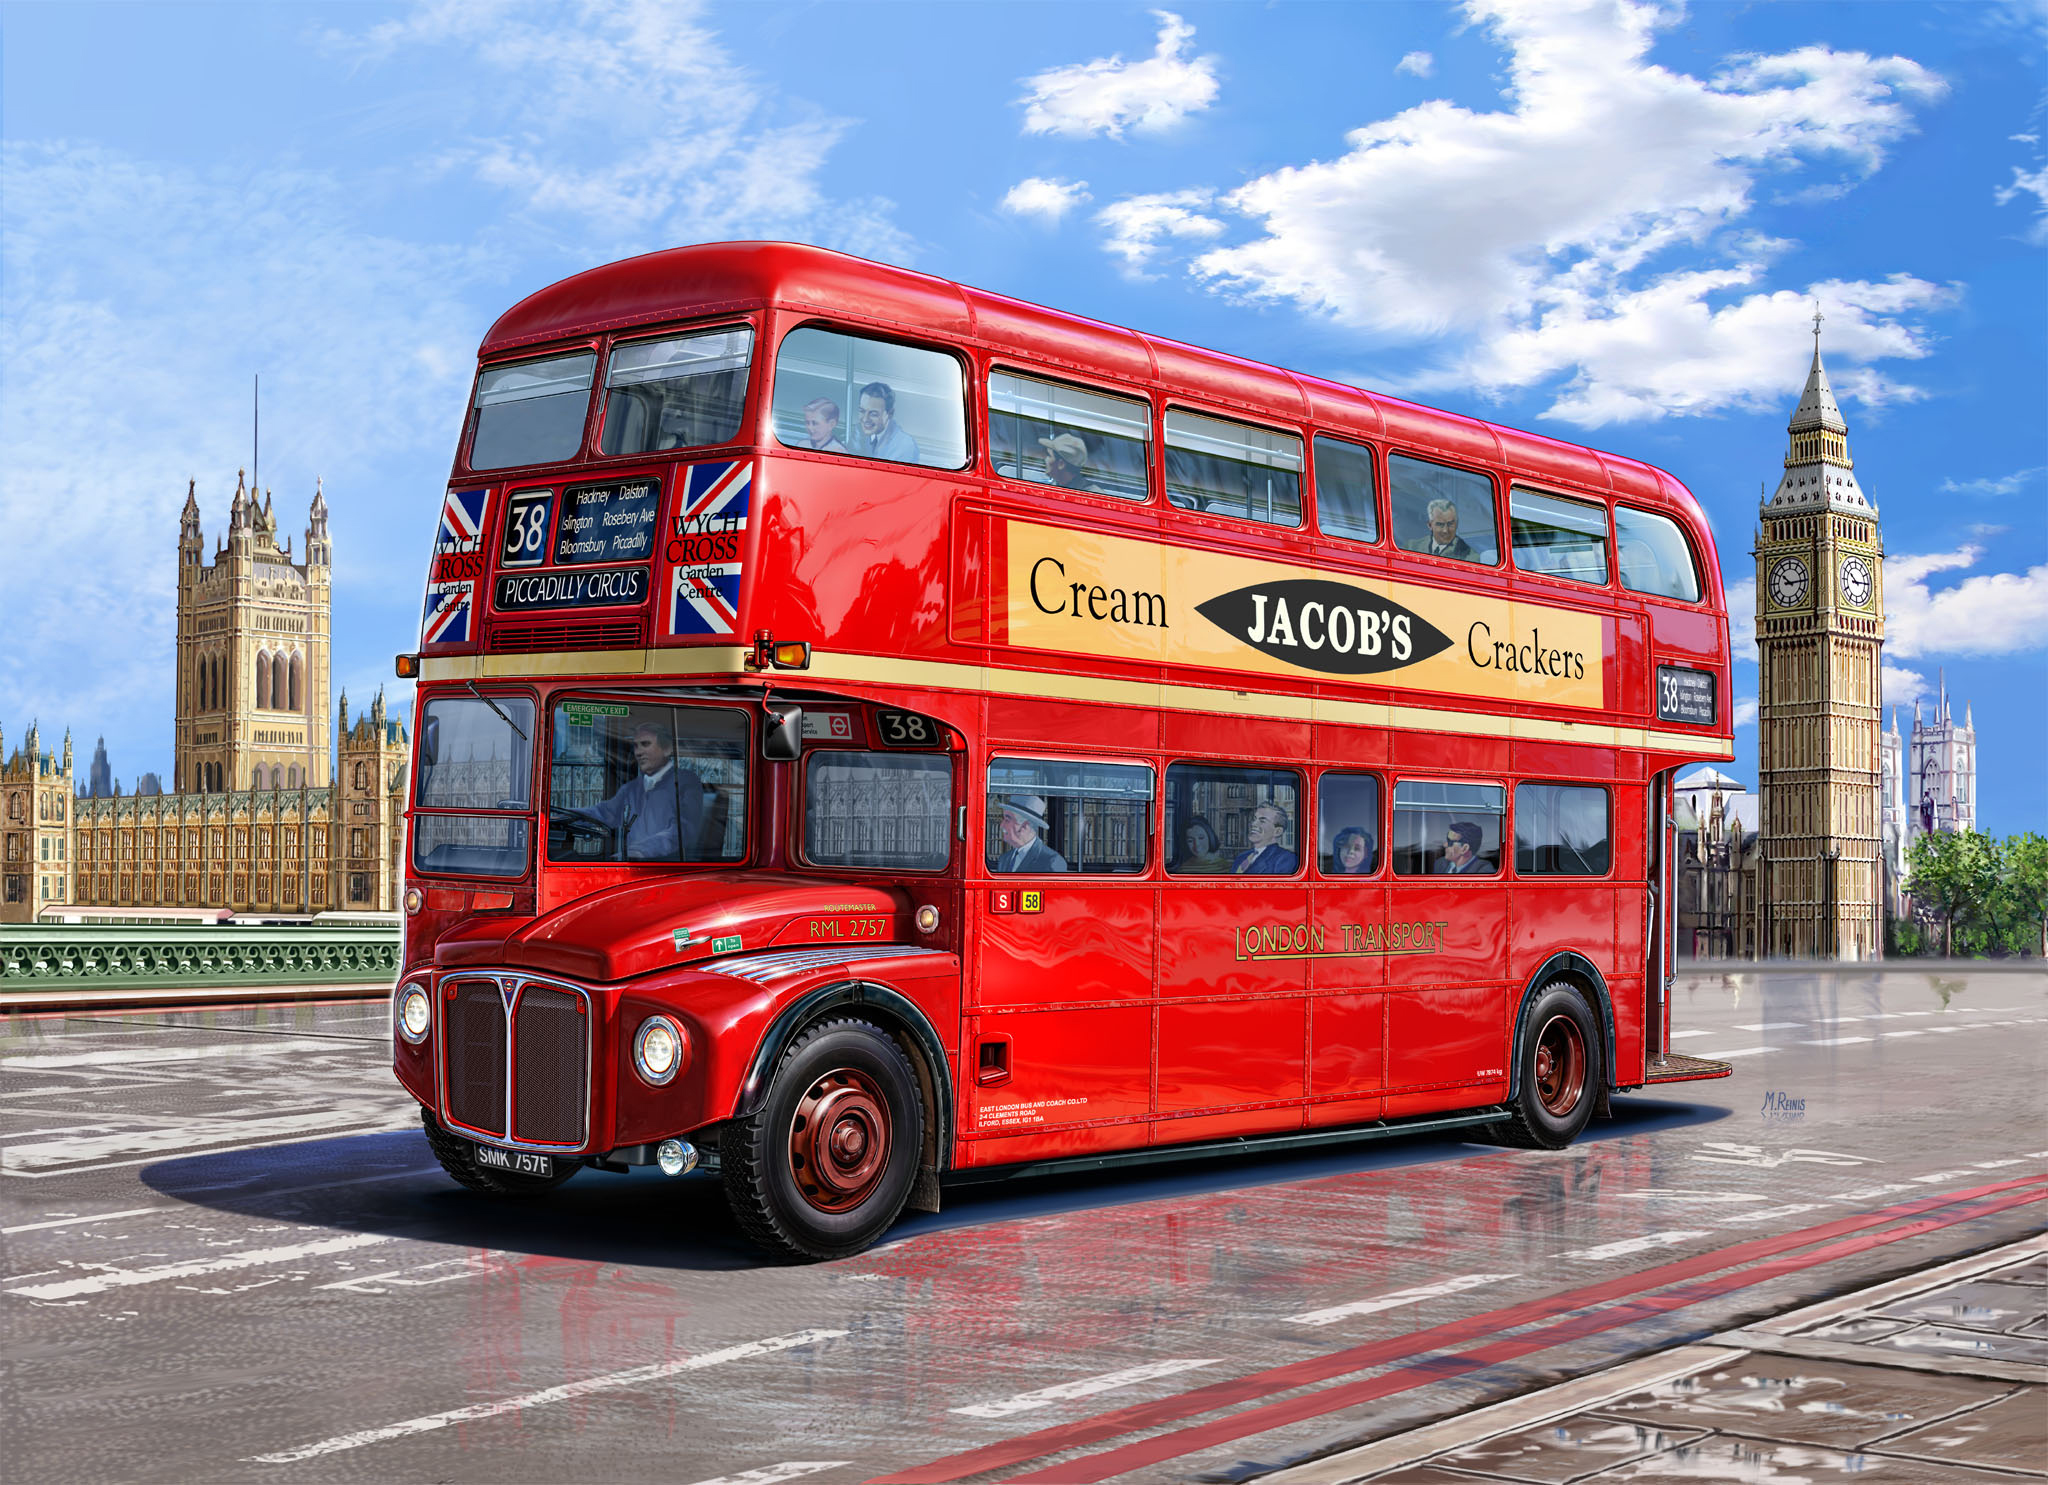 REVELL London Mehrfarbig Bus 07651 Bausatz,